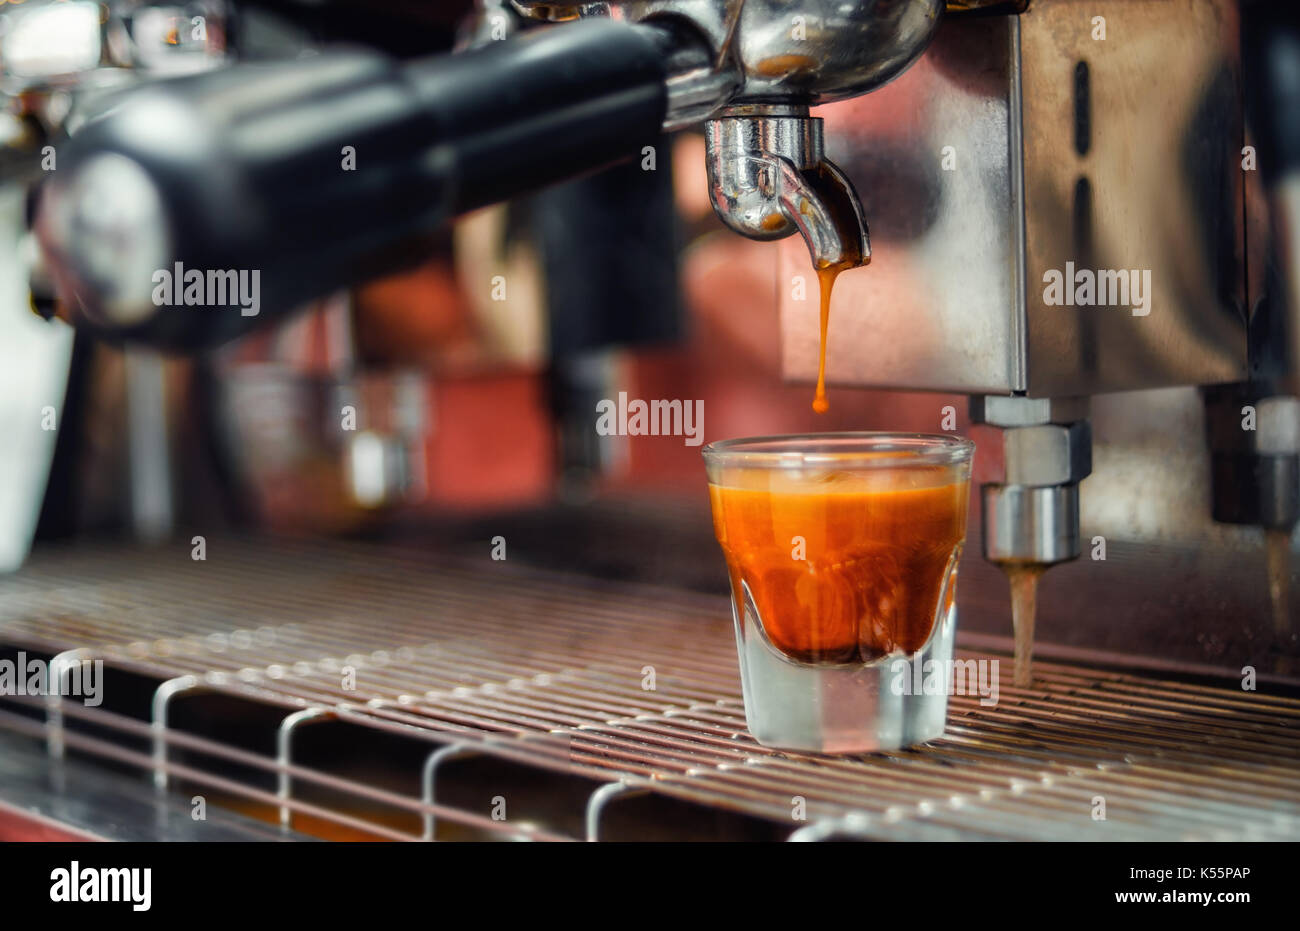 New Retro Designed Commercial Coffee Machine Stock Photo